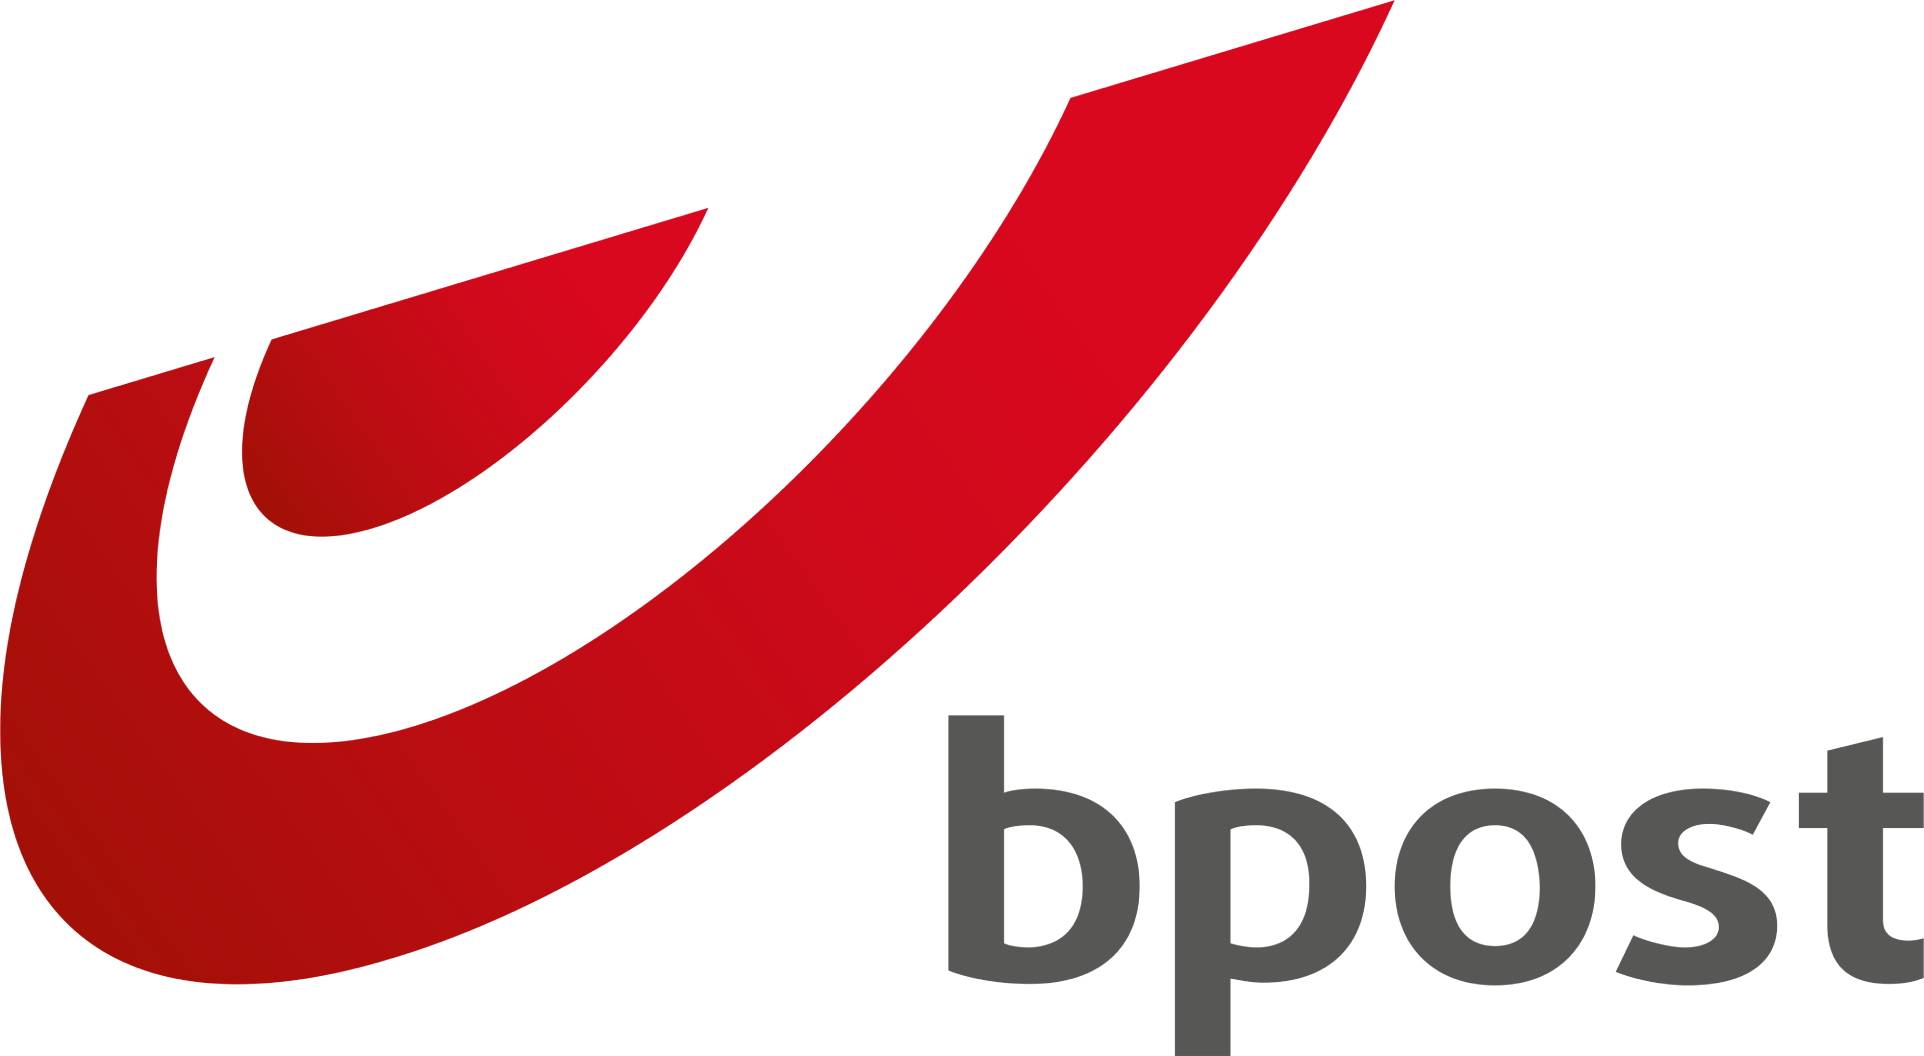 Bpost logo large (transparent PNG)